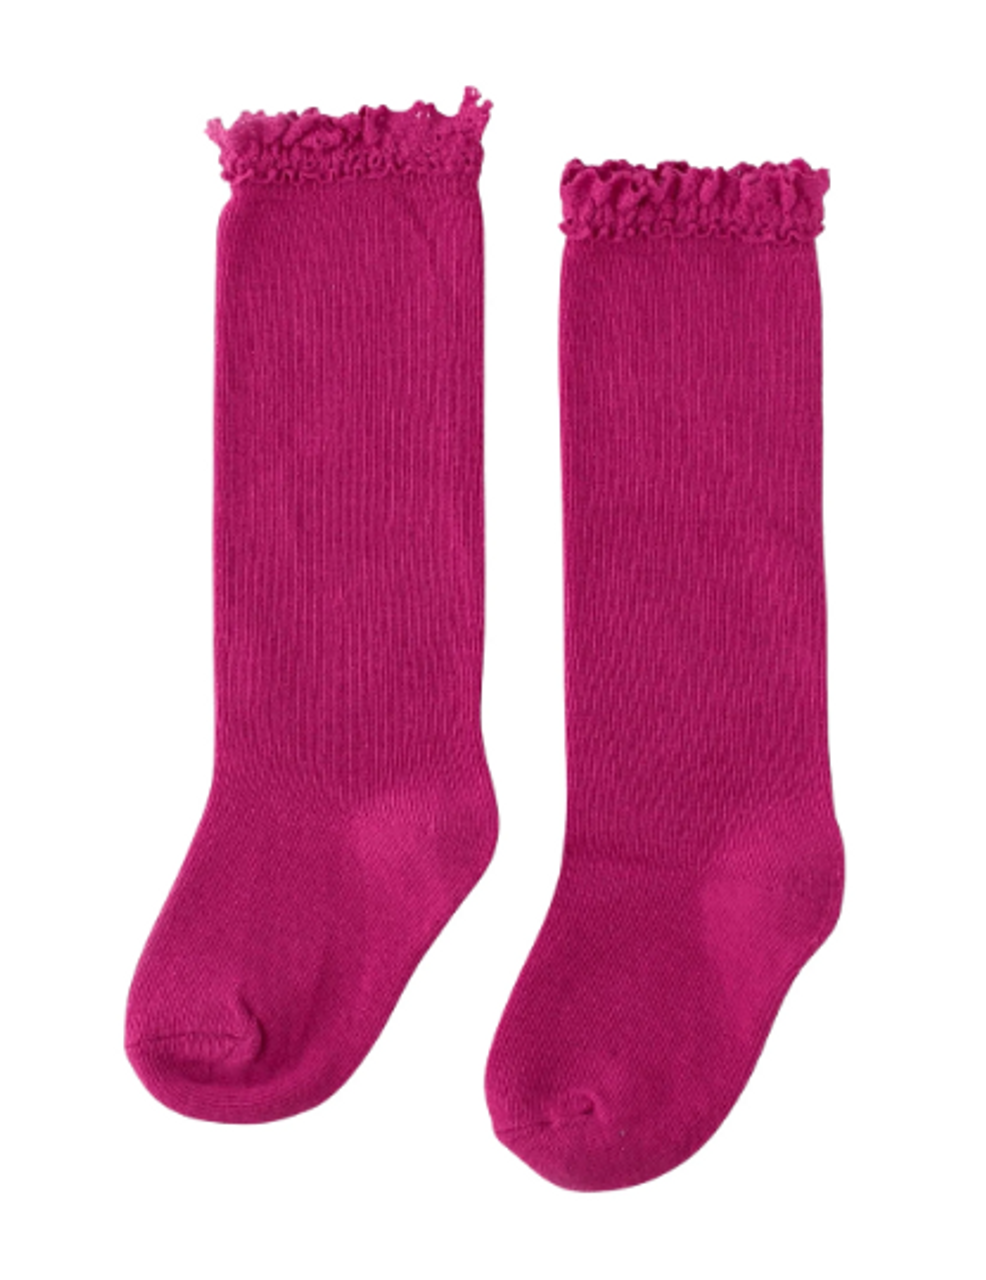 Girl's Fuchsia Lace Top Knee High Socks